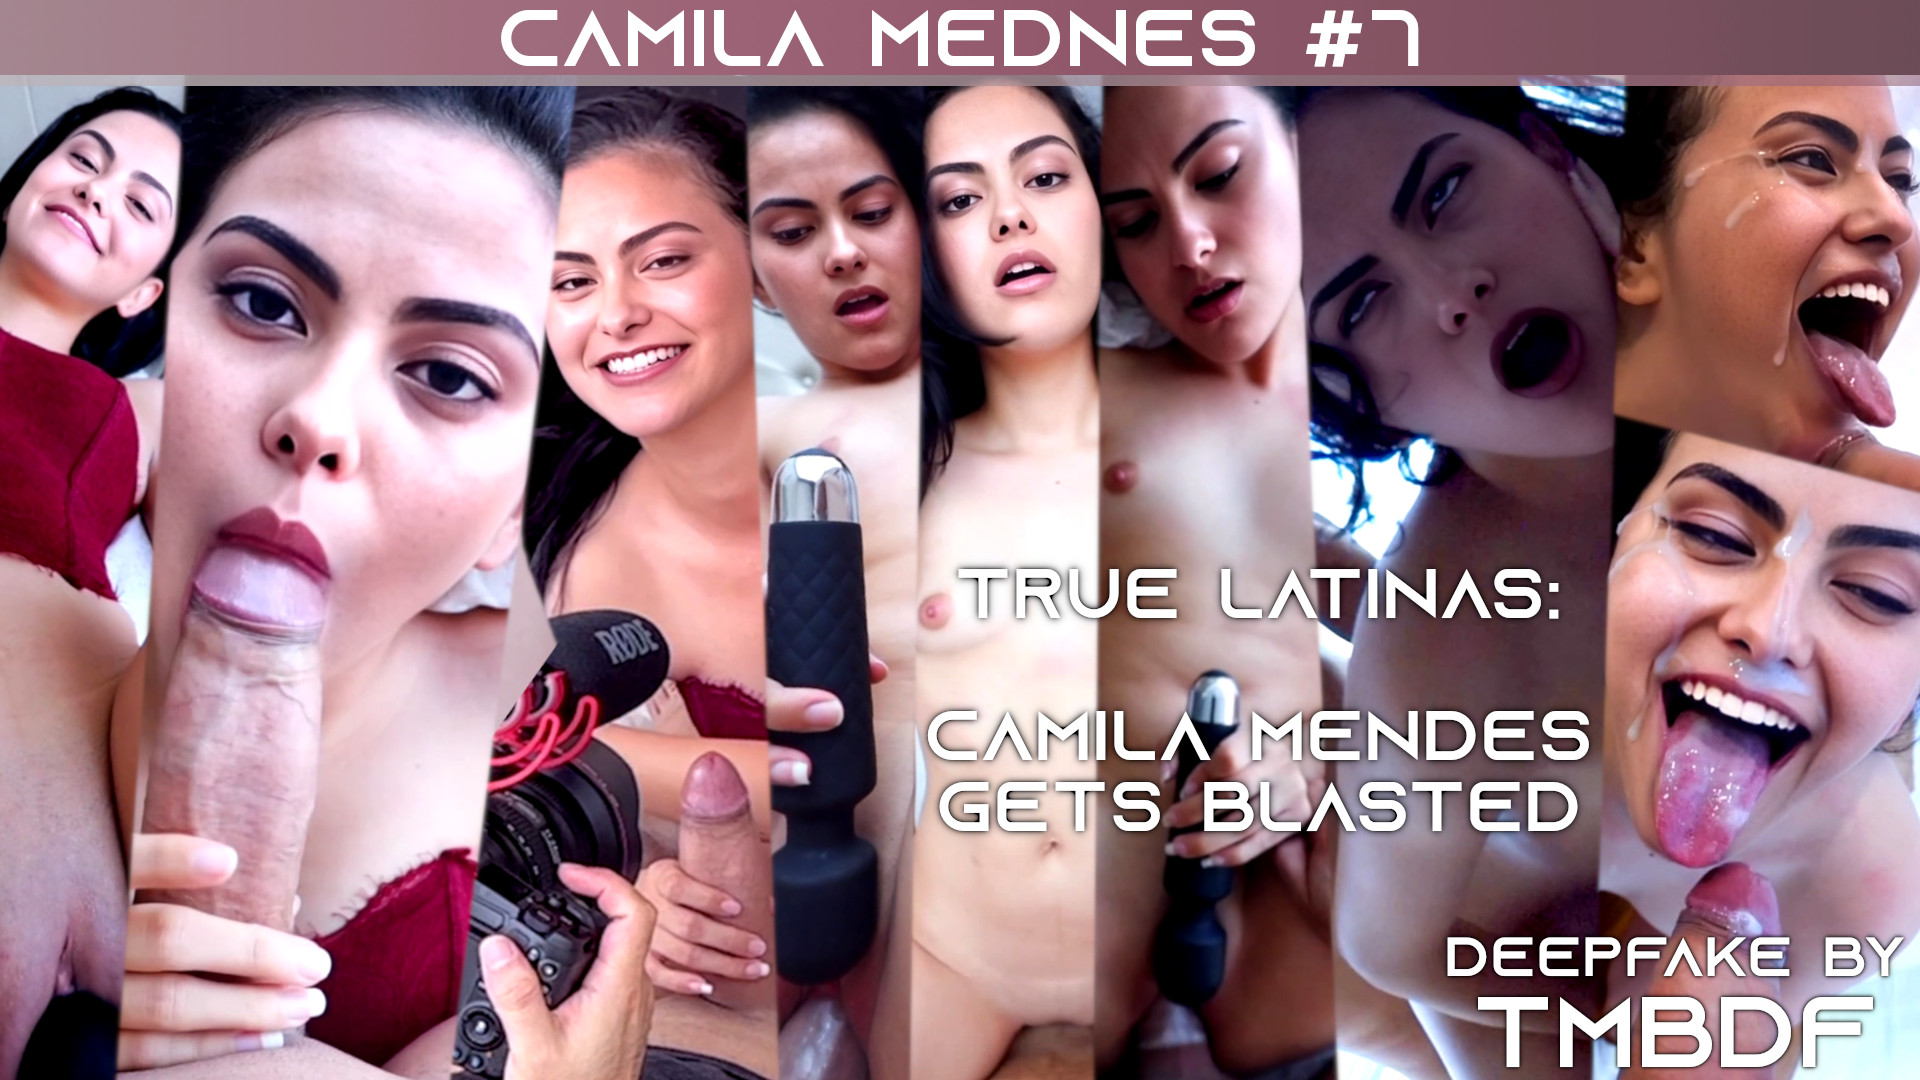 Camila Mendes #7 - FULL VERSION